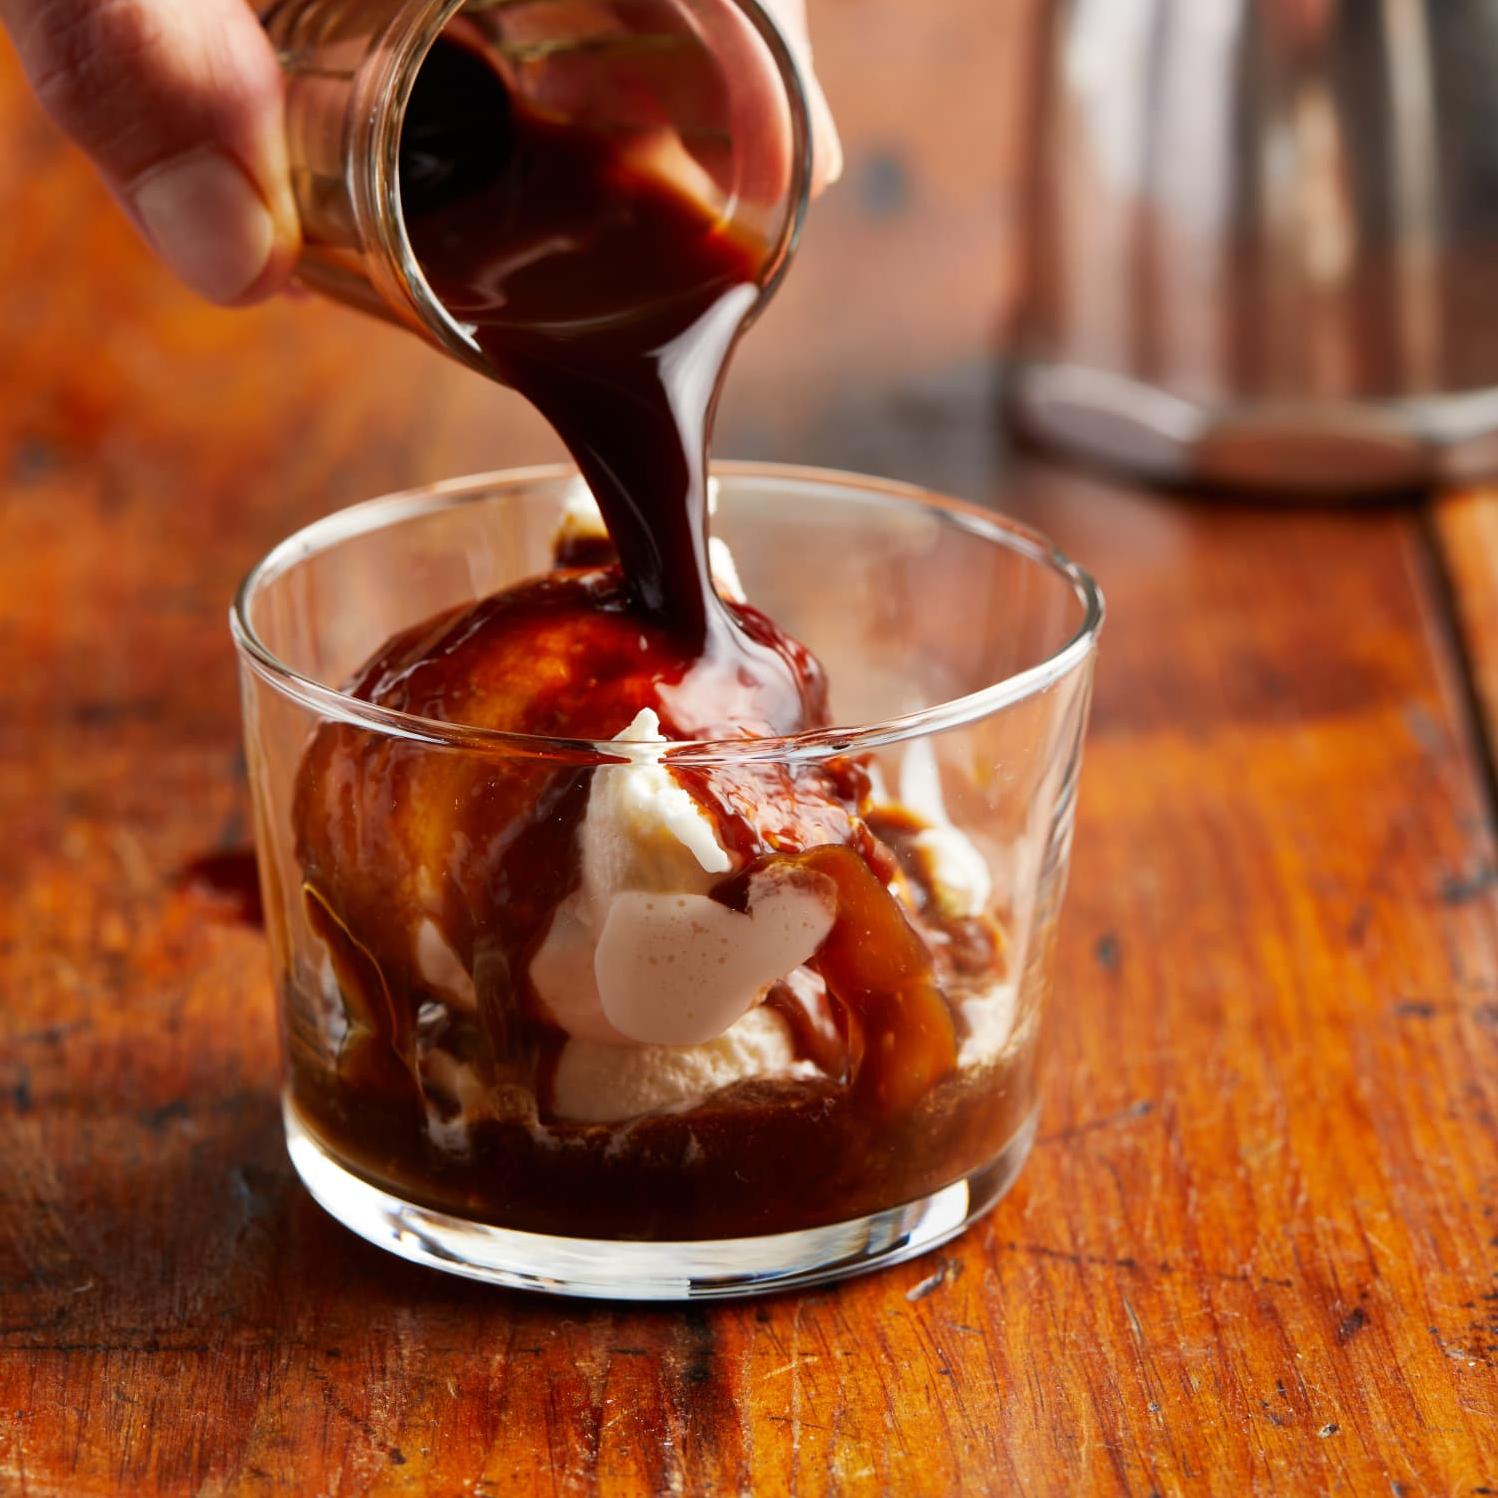 Heavenly Delight: Ice-cream with Espresso Sauce Recipe